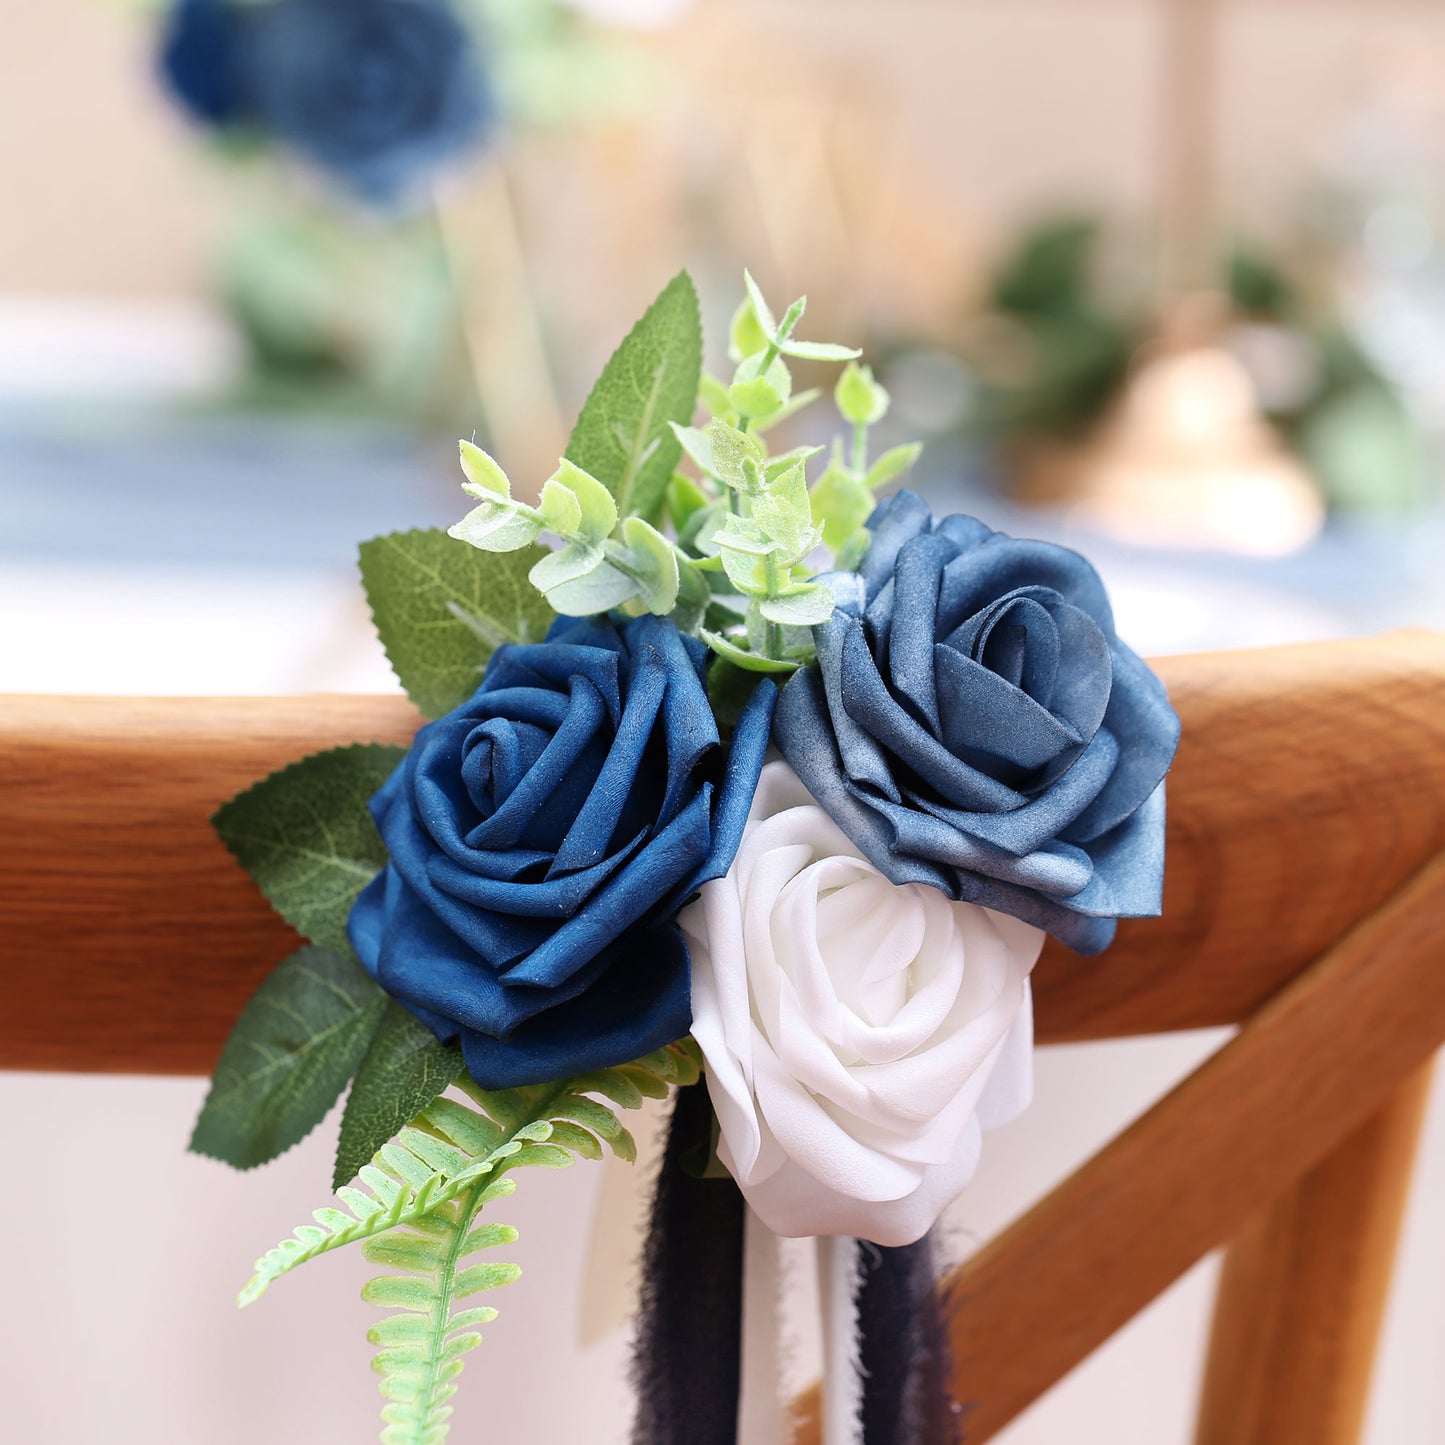 Faneya 12pcs Blue White Floral Wedding Flower Artificial Flowers